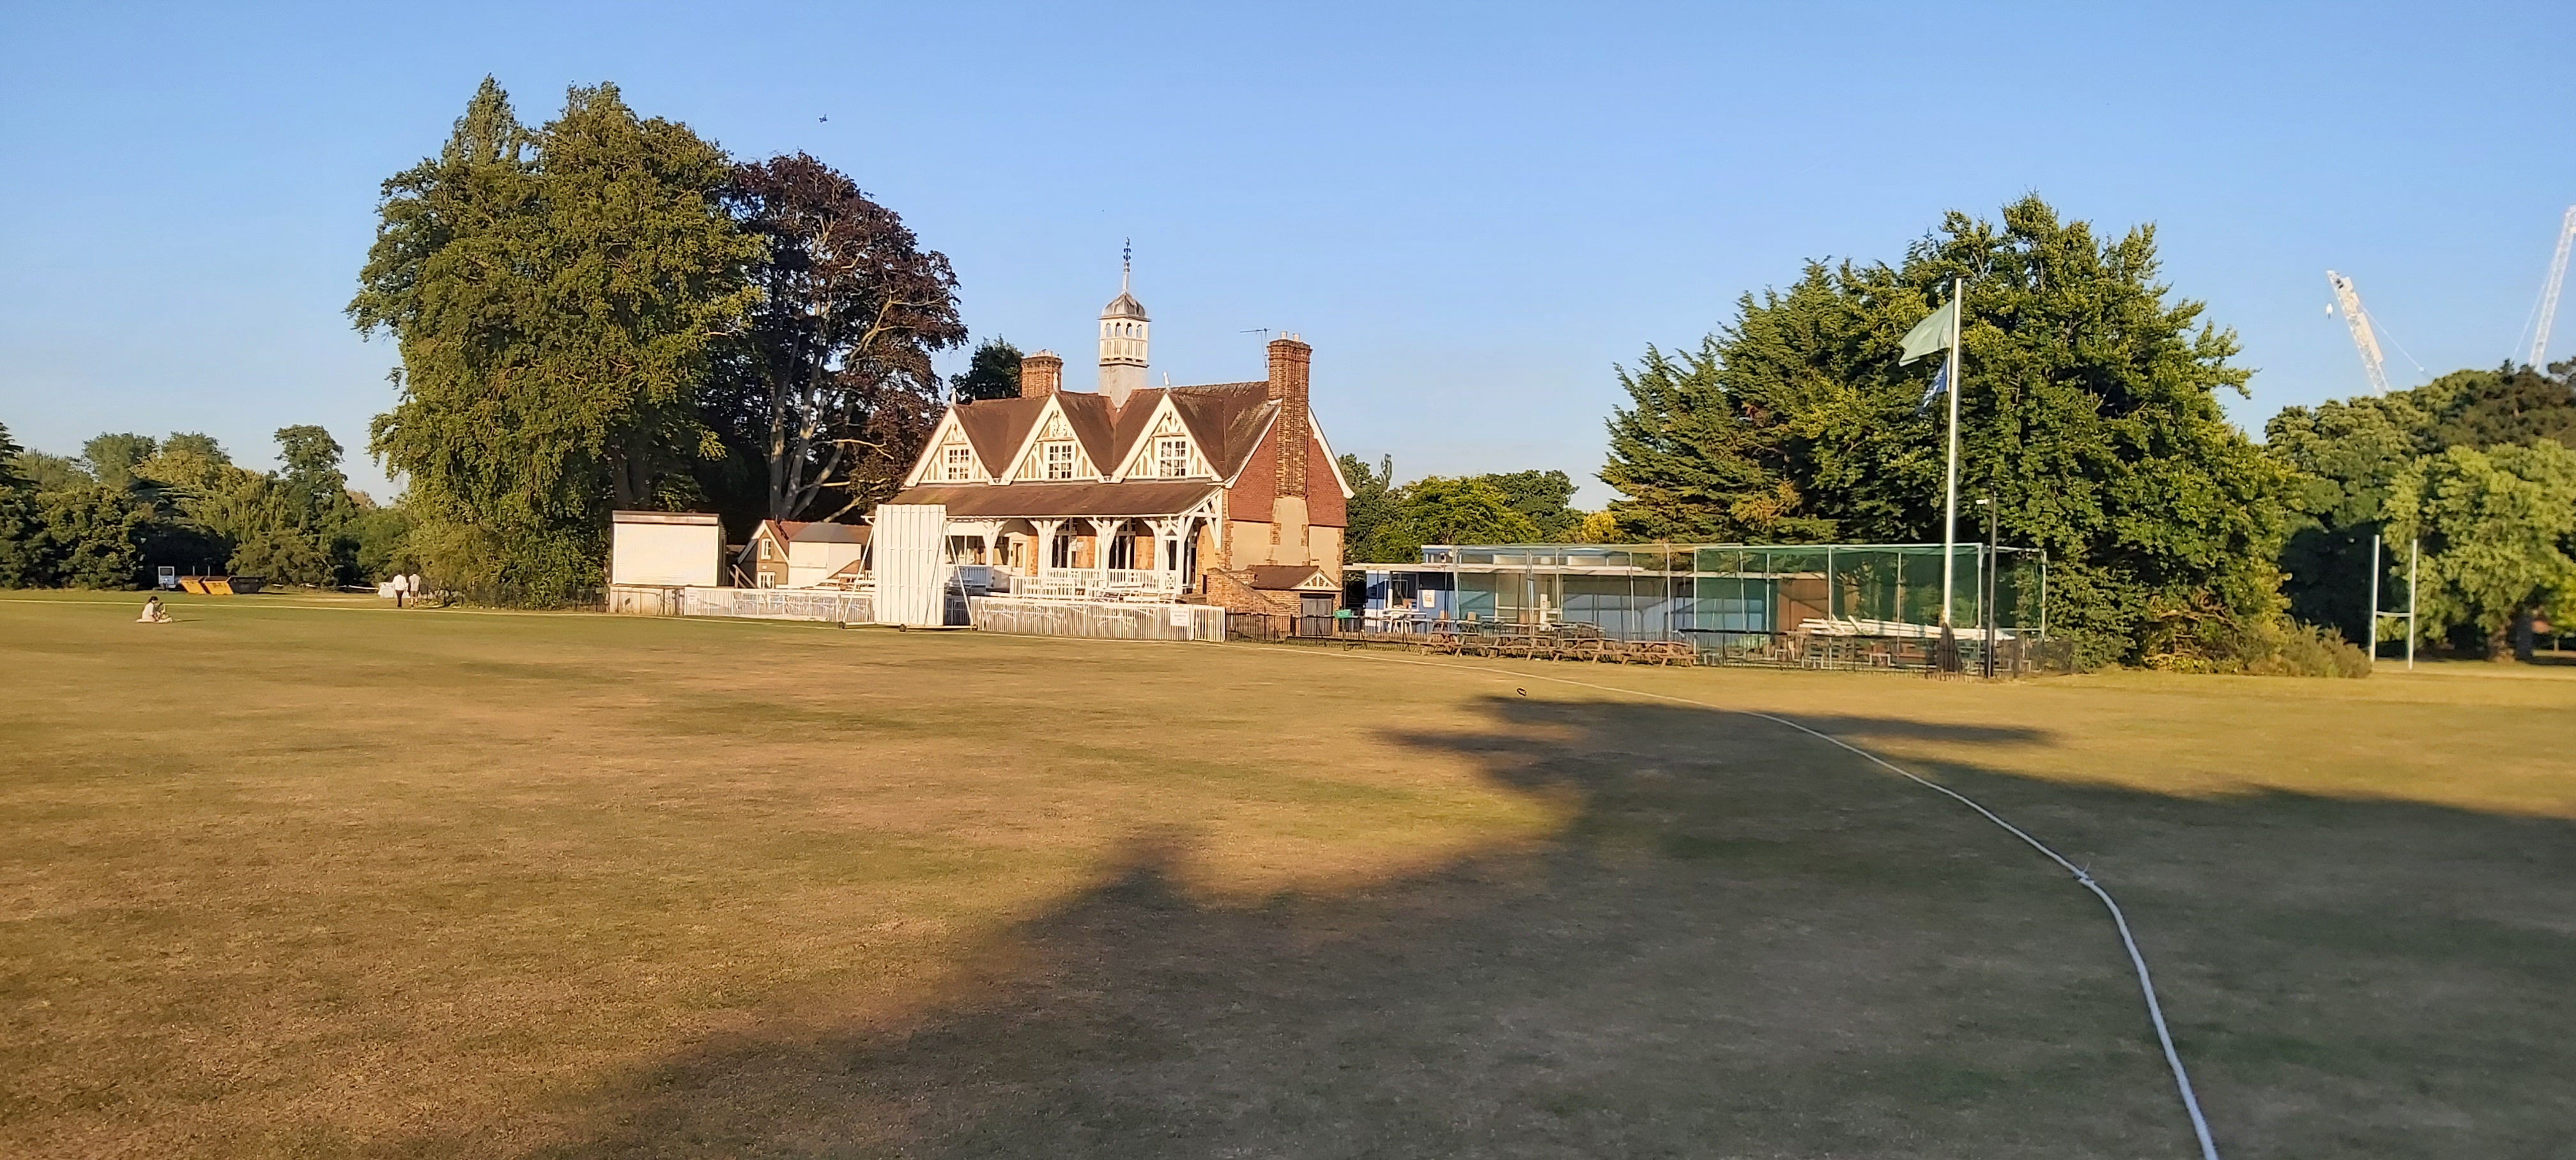 Oxford University Cricket Ground: the pavilion  